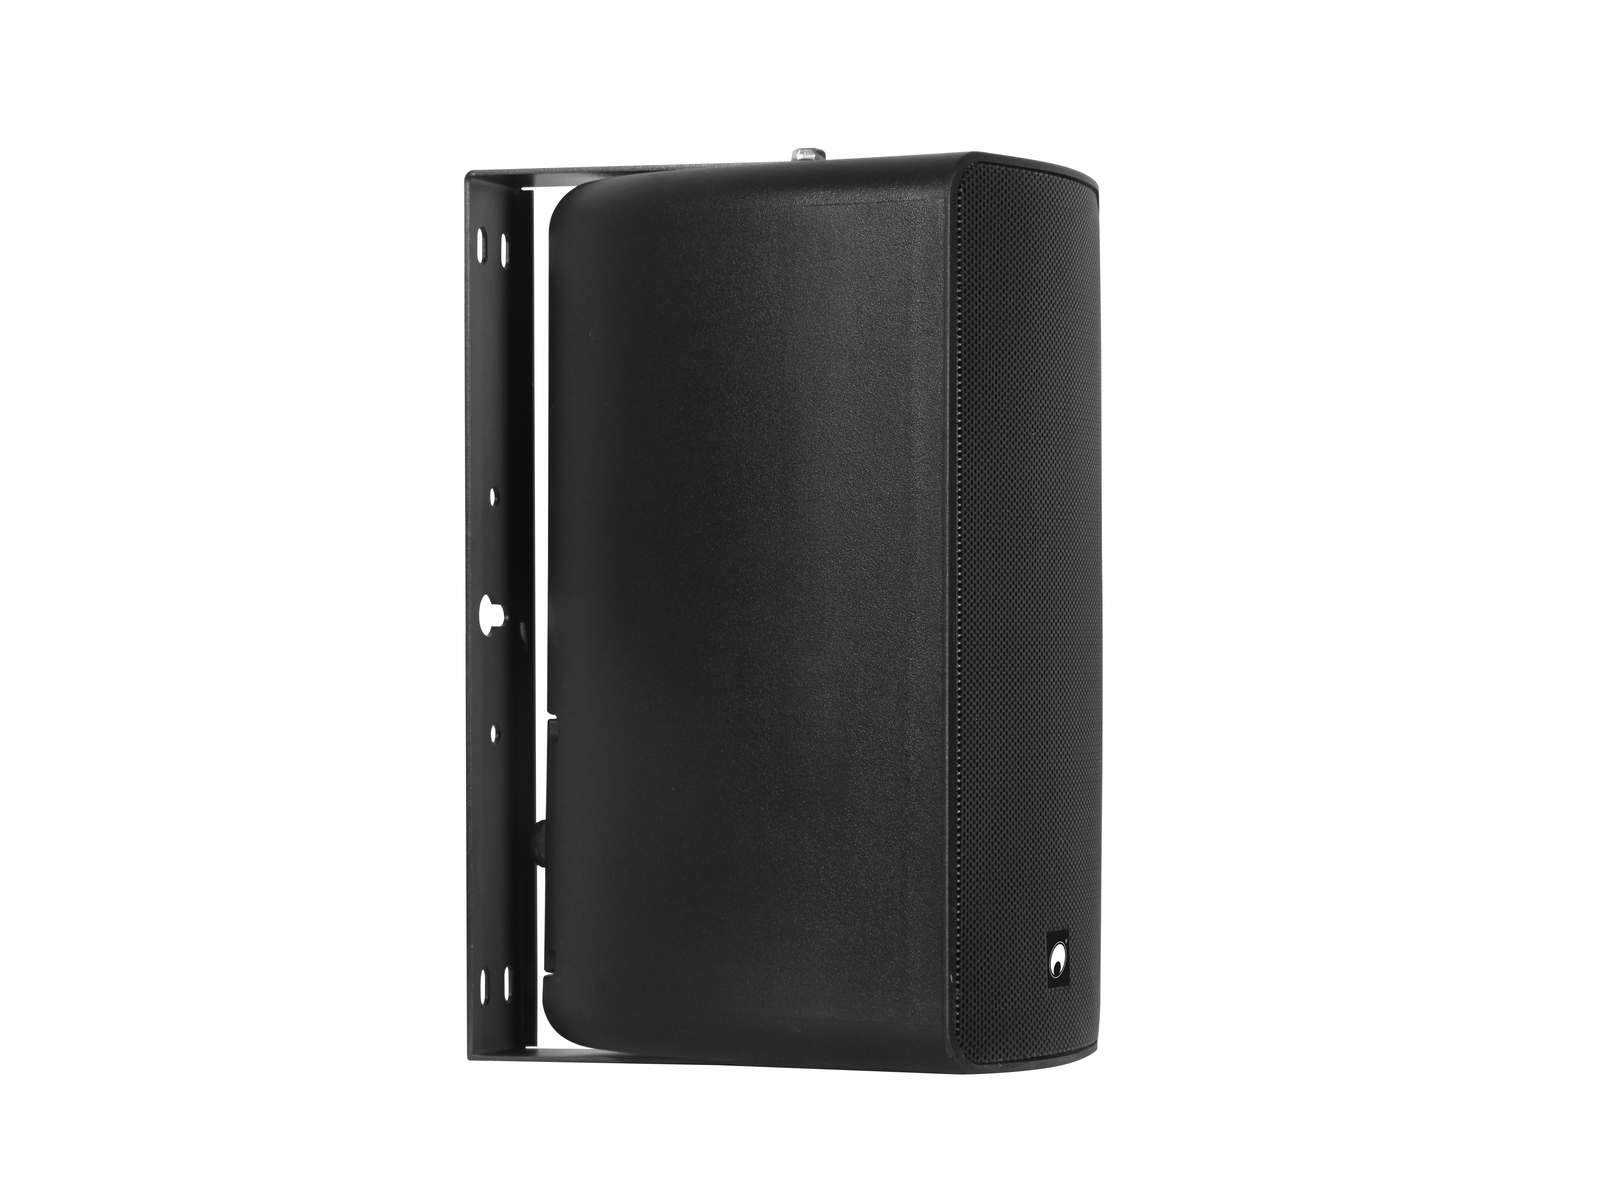 OMNITRONIC ODP-206 Installation Speaker 16 ohms black 2x